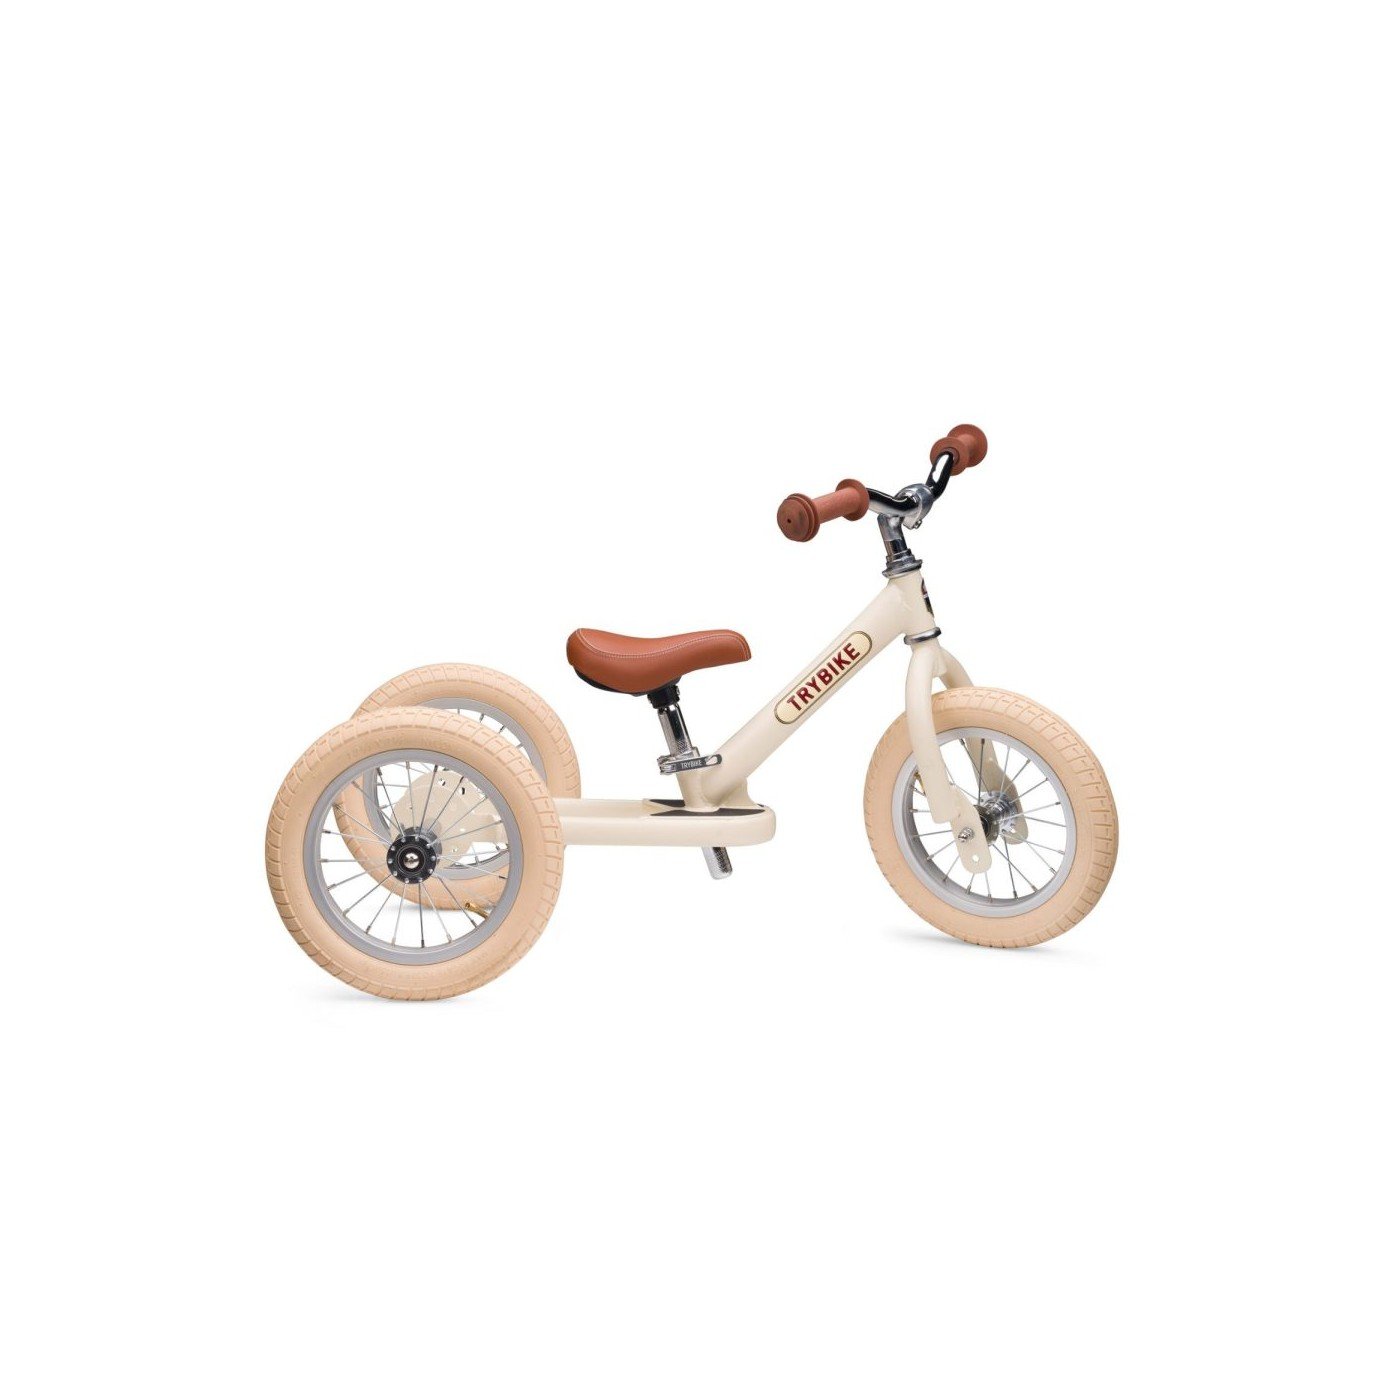 Trybike - 3 Hjulet Balancecykel, Creme